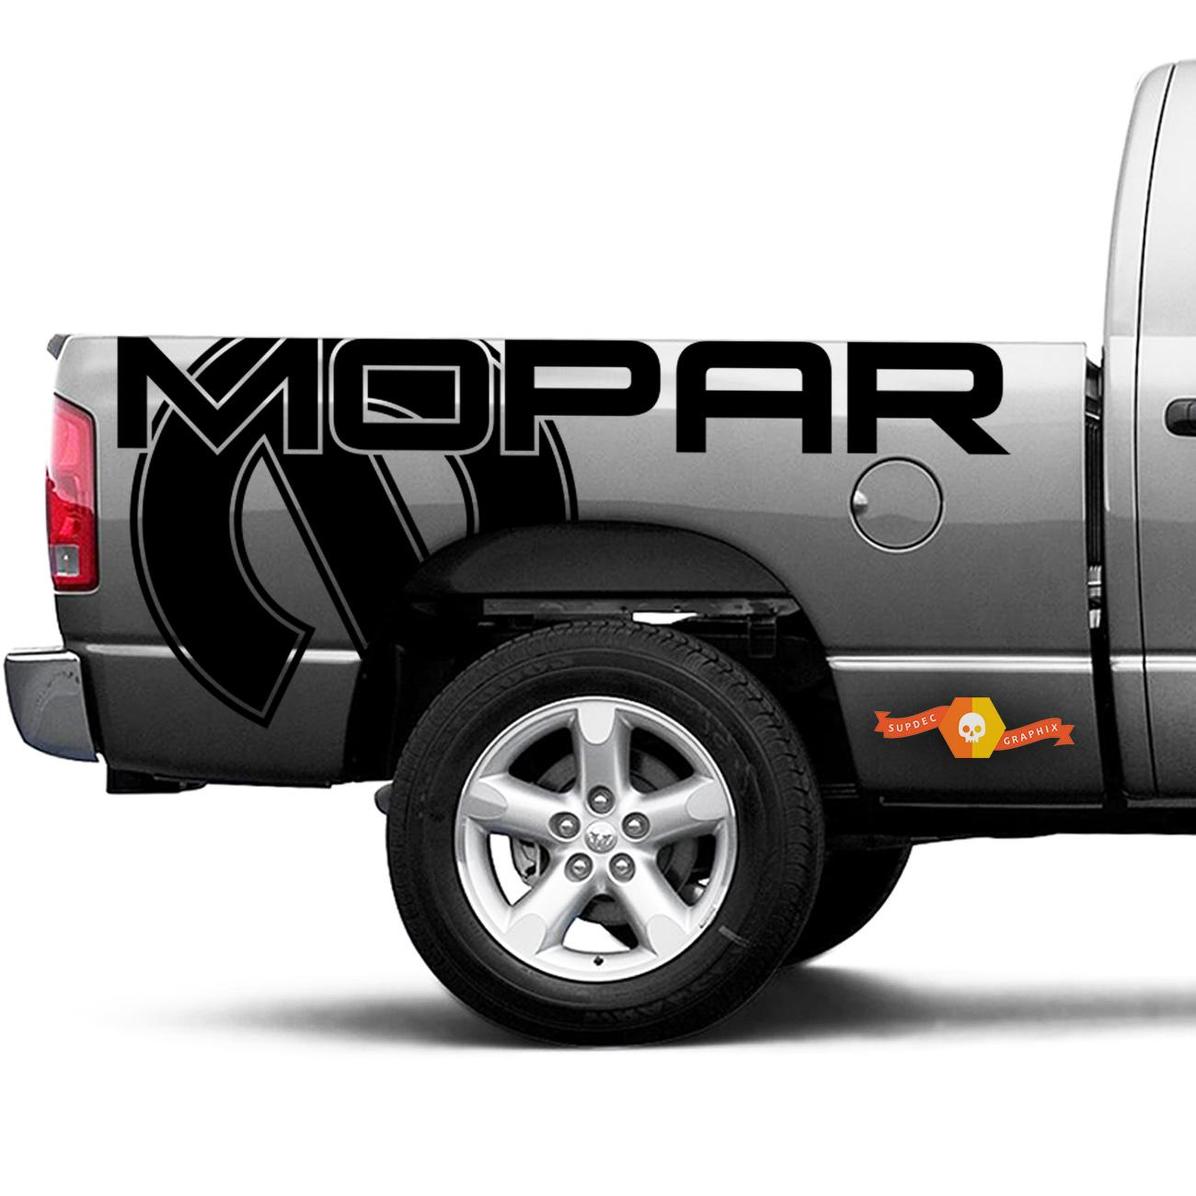 Dodge Ram Truck 1500/2500 MOPAR side Graphic vinyl decals stickers fits models 2002-2020